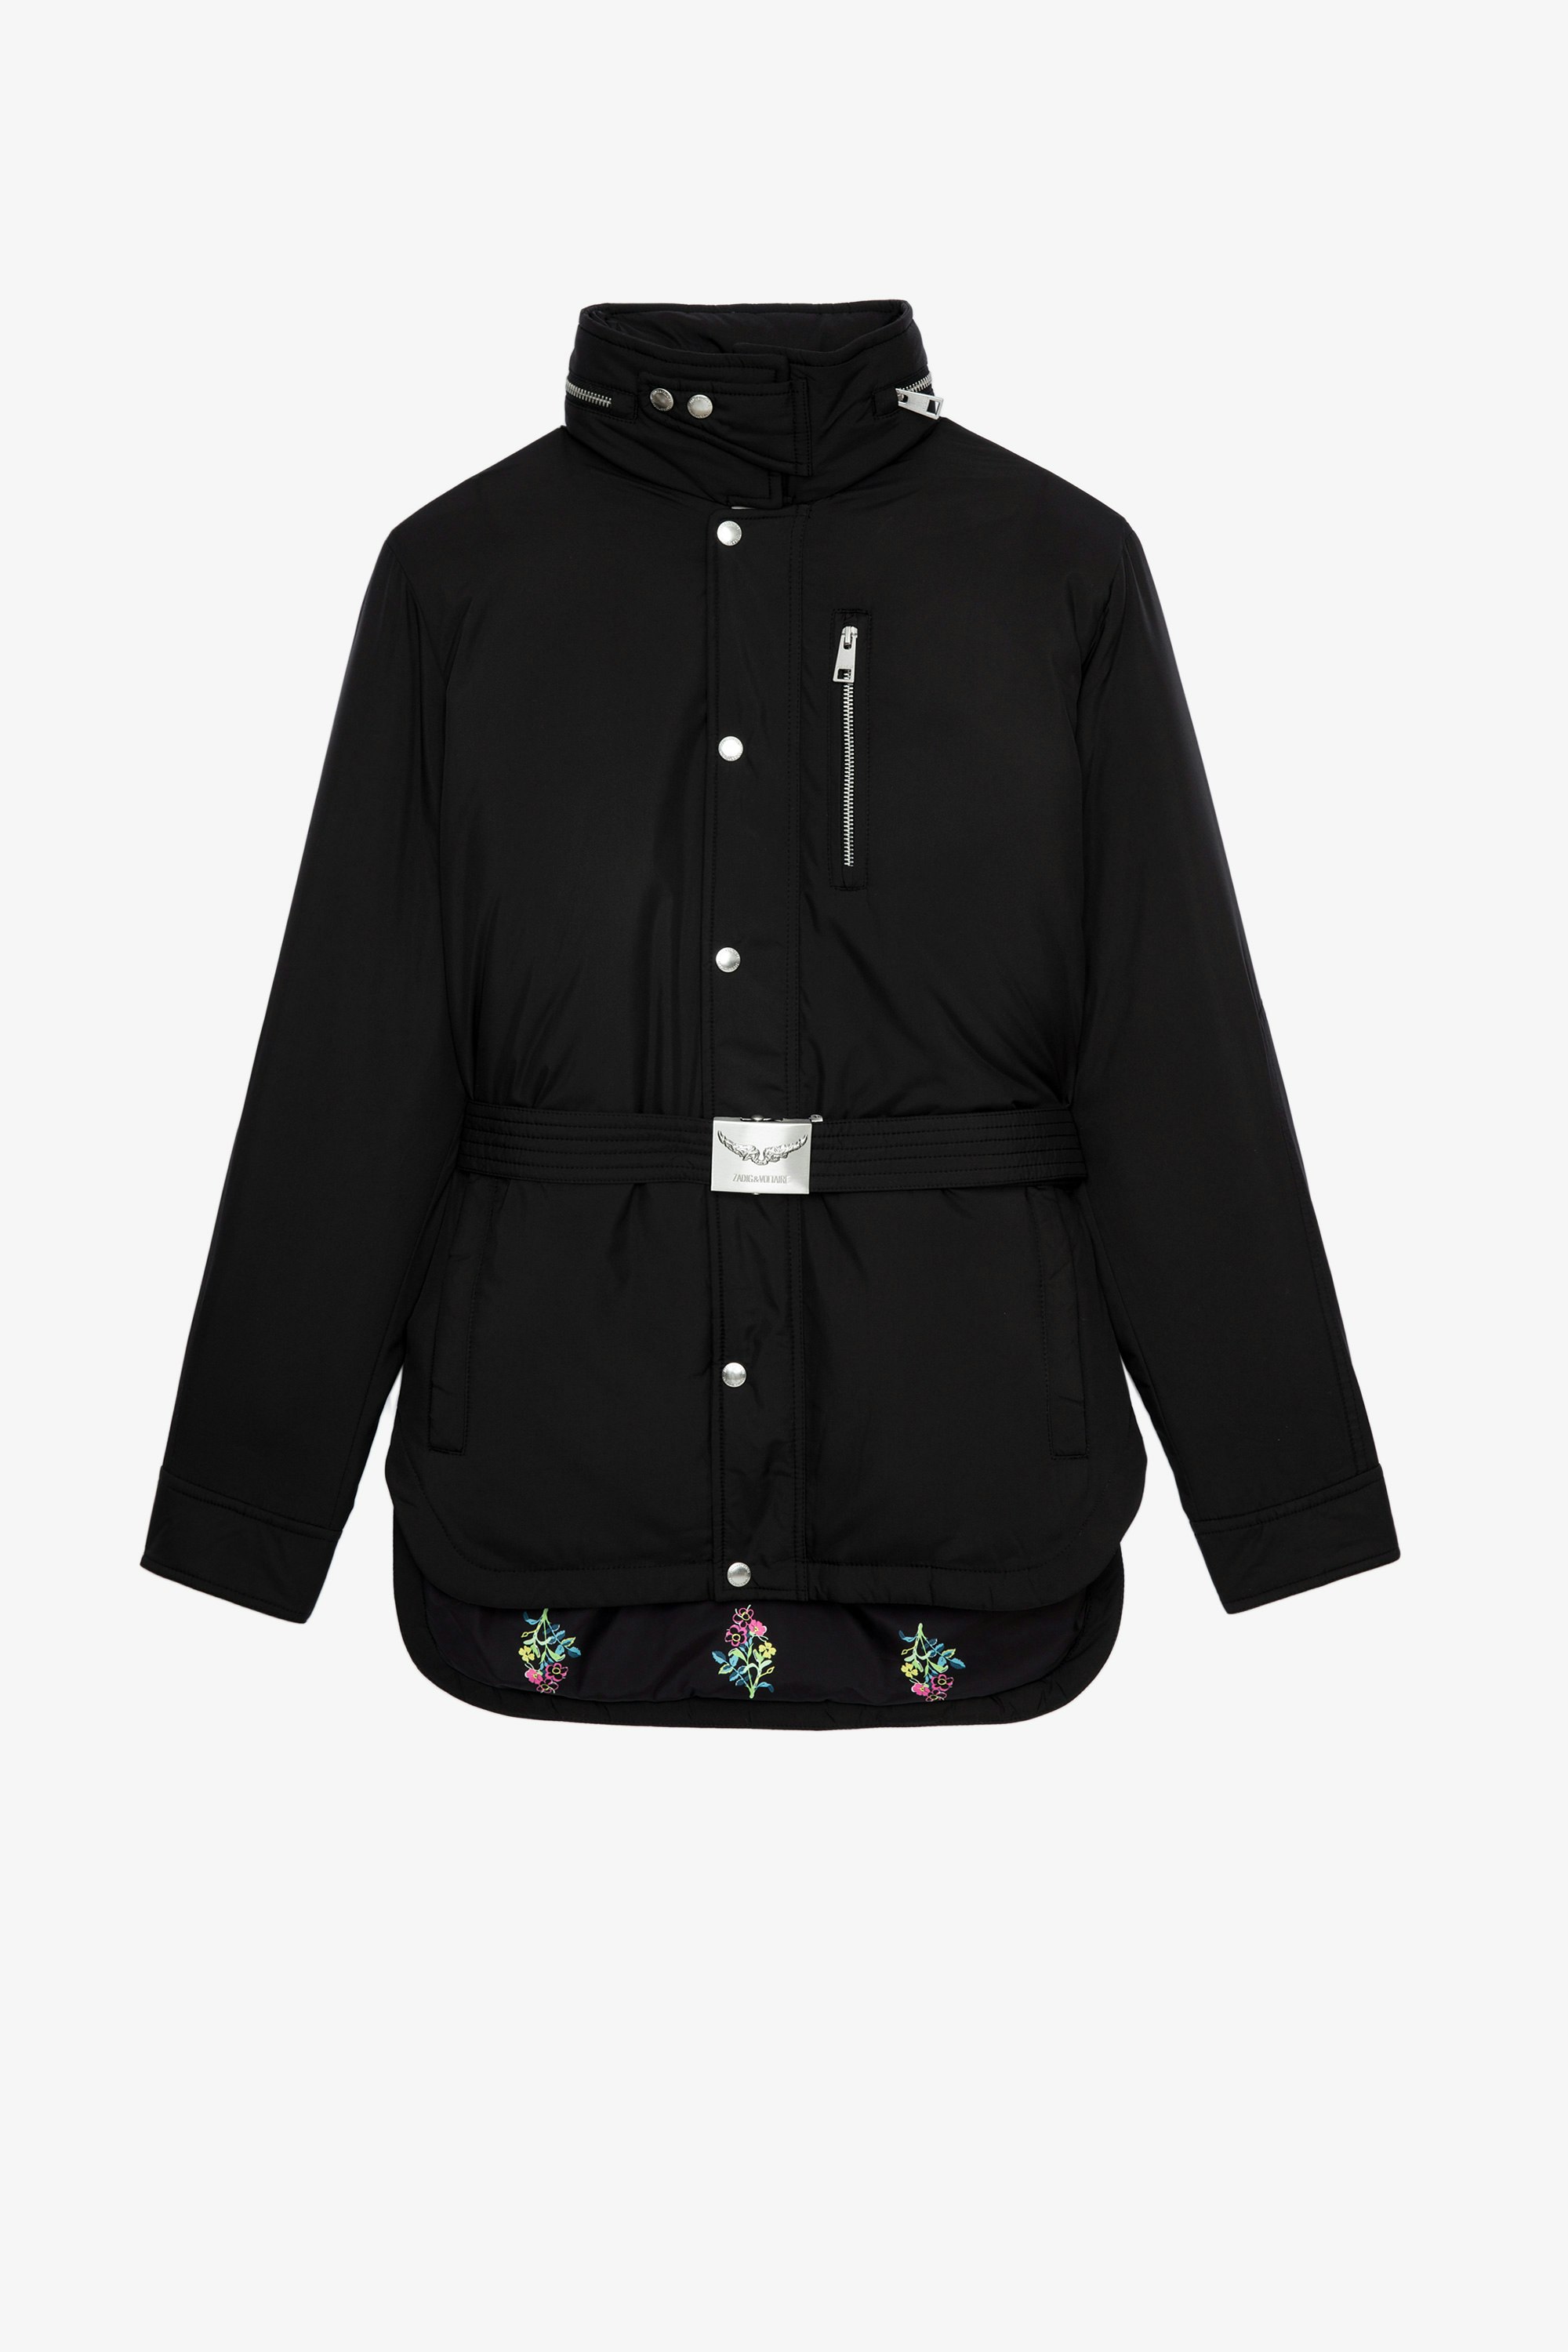 Kalice コート Women’s black nylon coat with hood and buckle belt